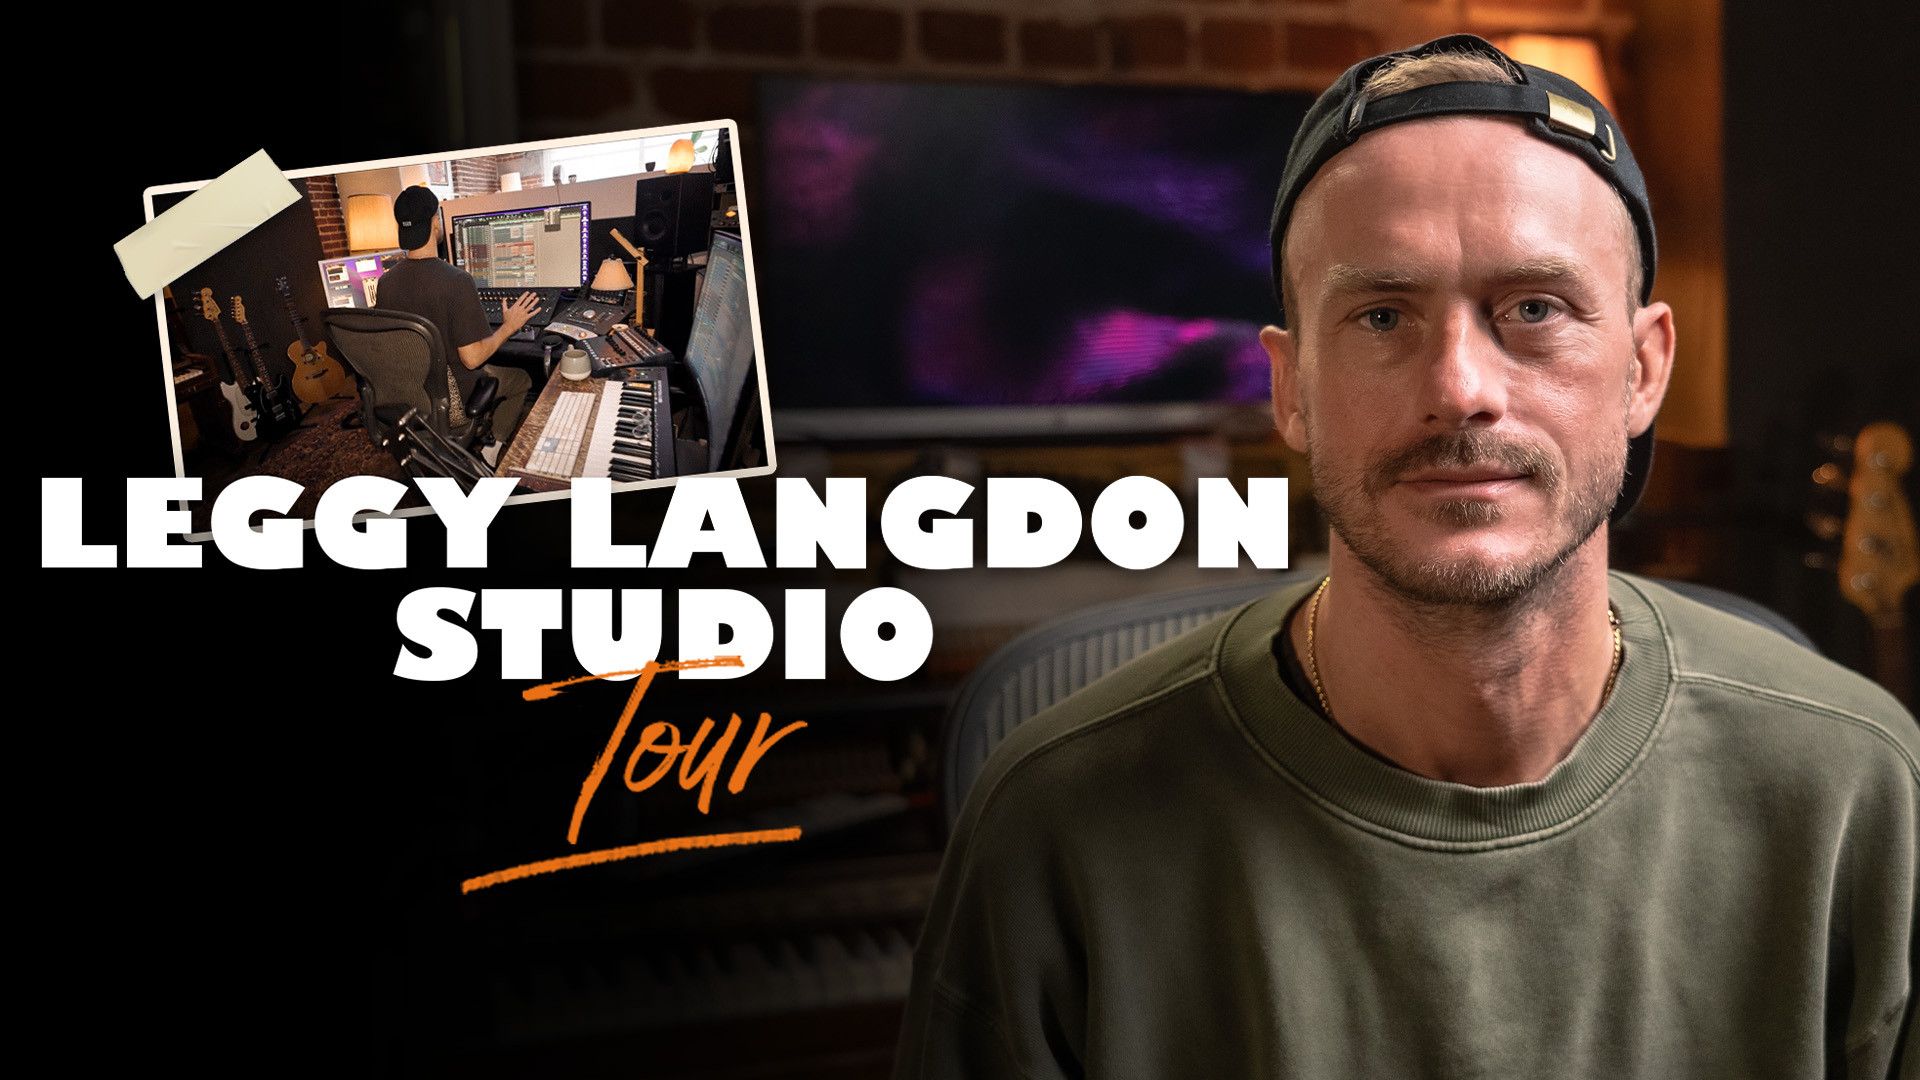 Leggy Langdon Studio Tour